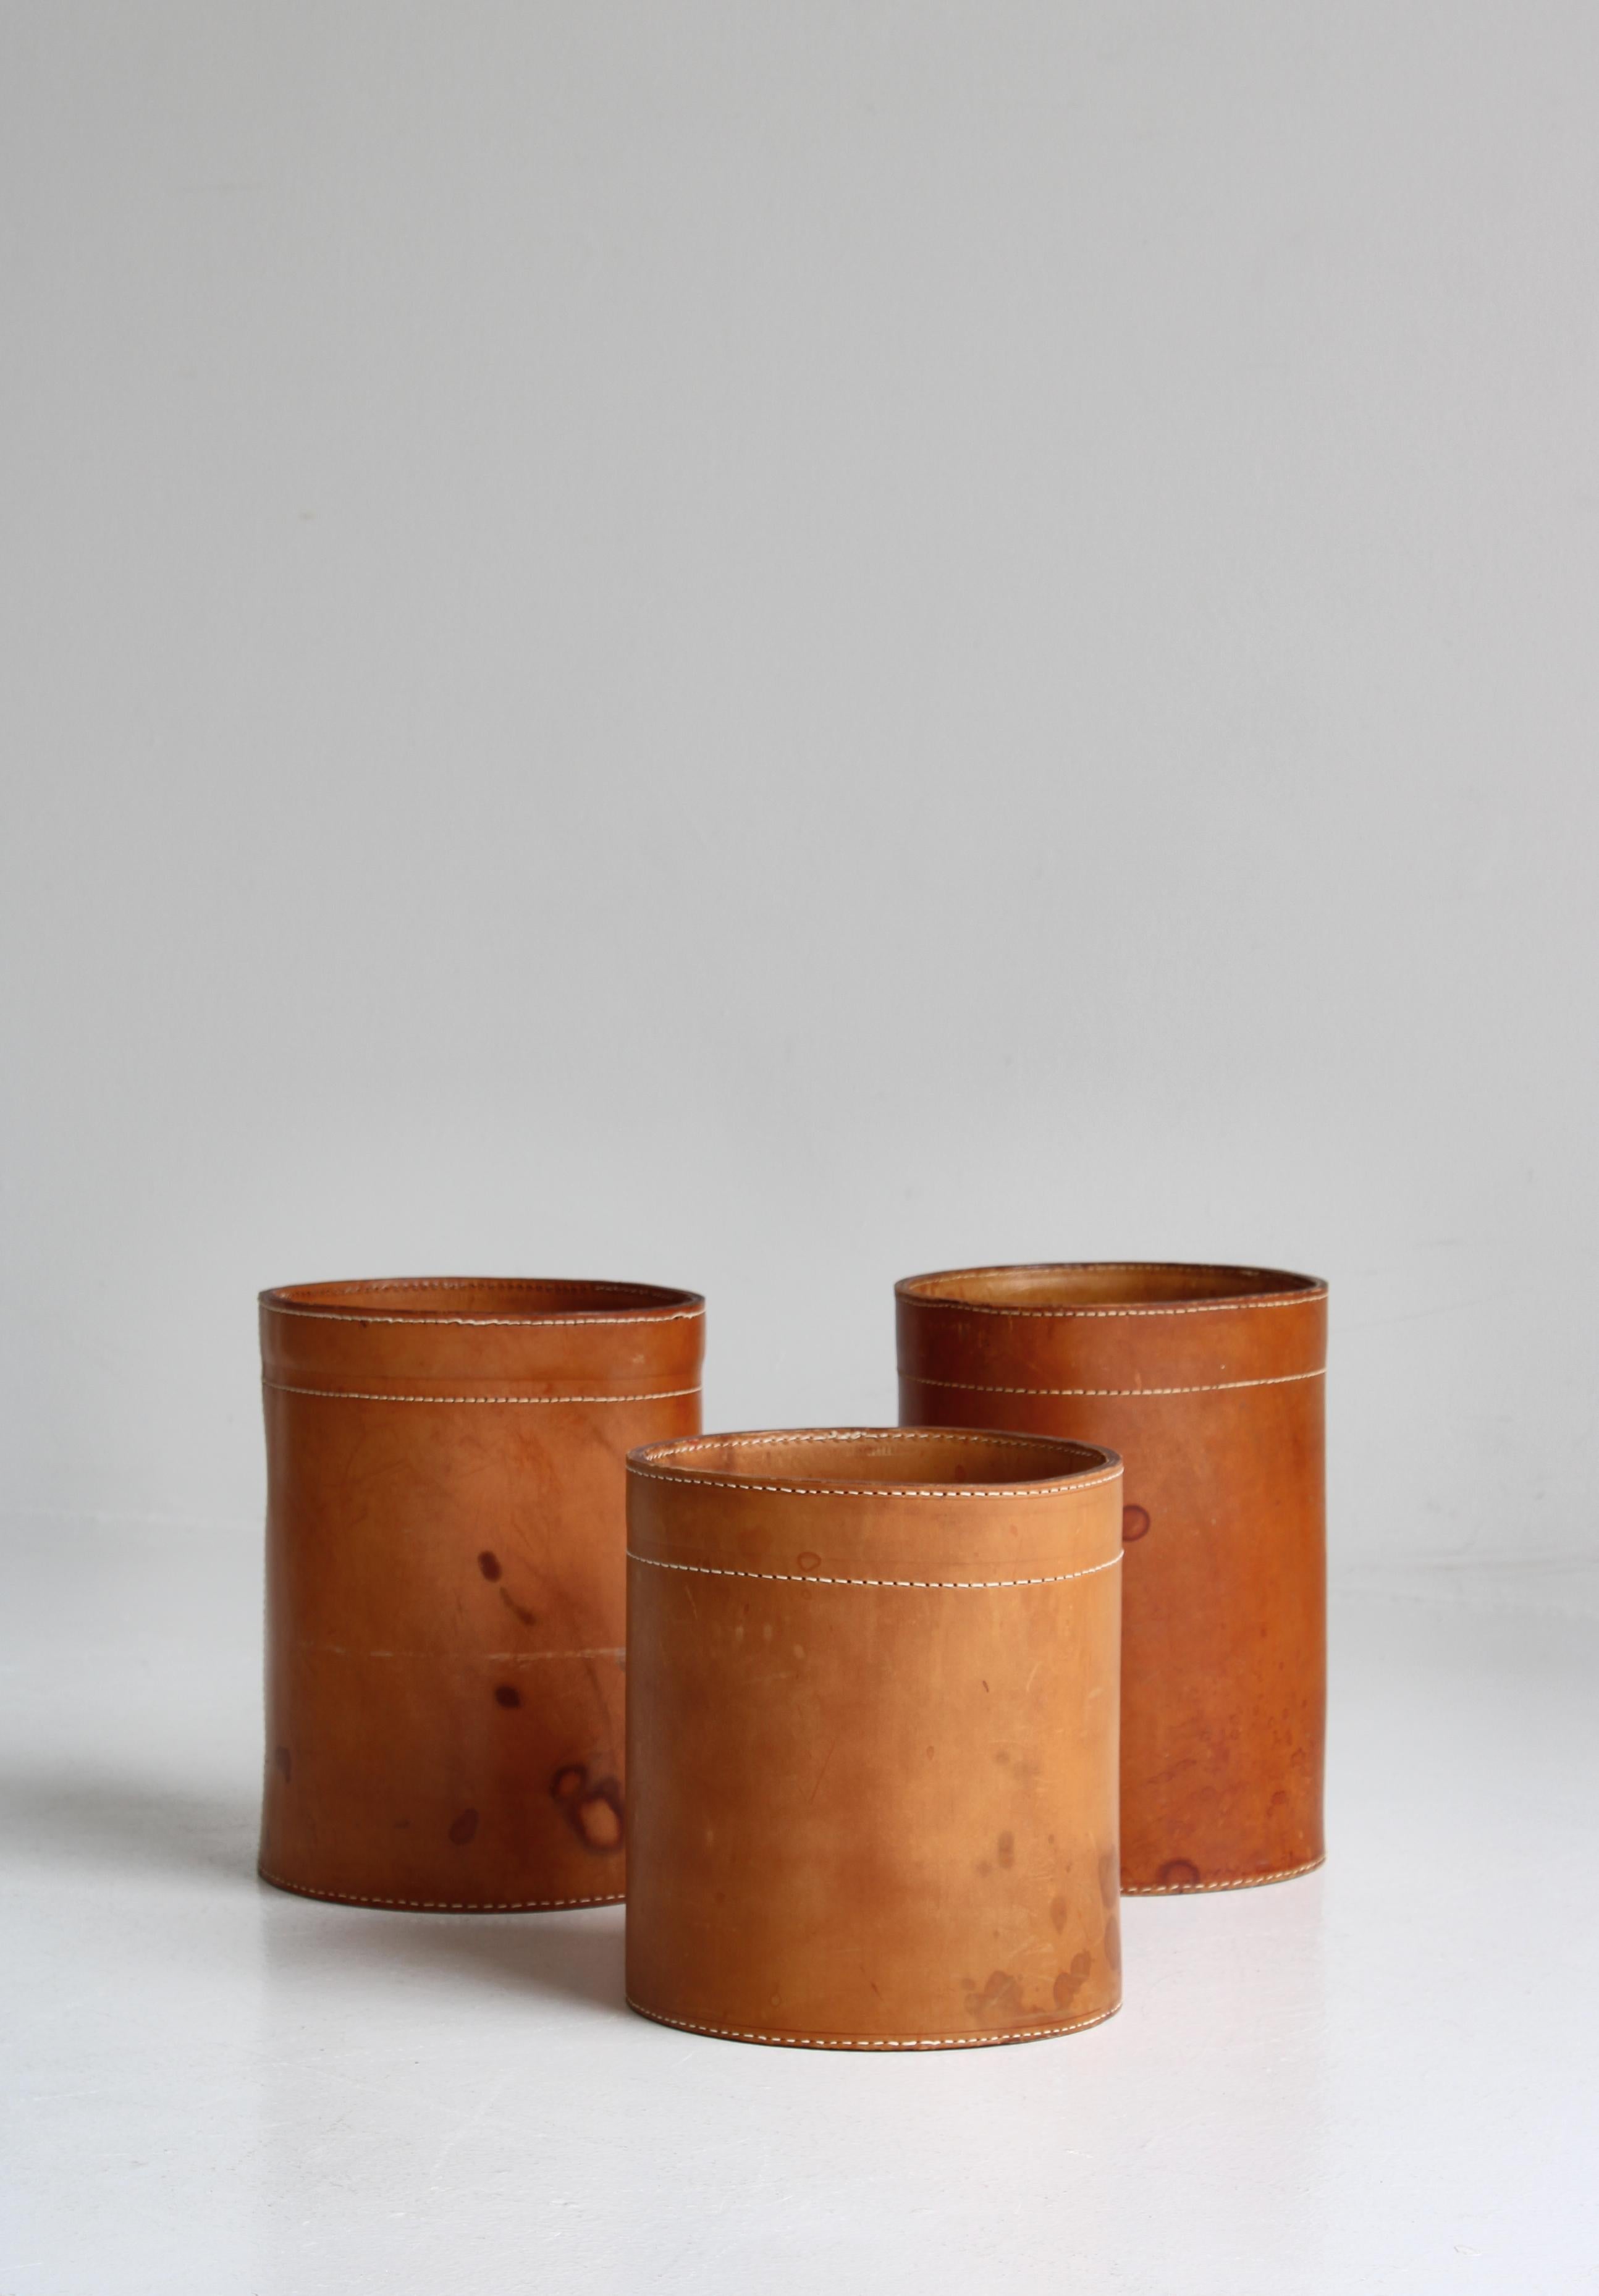 Scandinavian Modern Collection of Leather Baskets / Paper Bins by Ørskov & Co, Denmark, 1960s For Sale